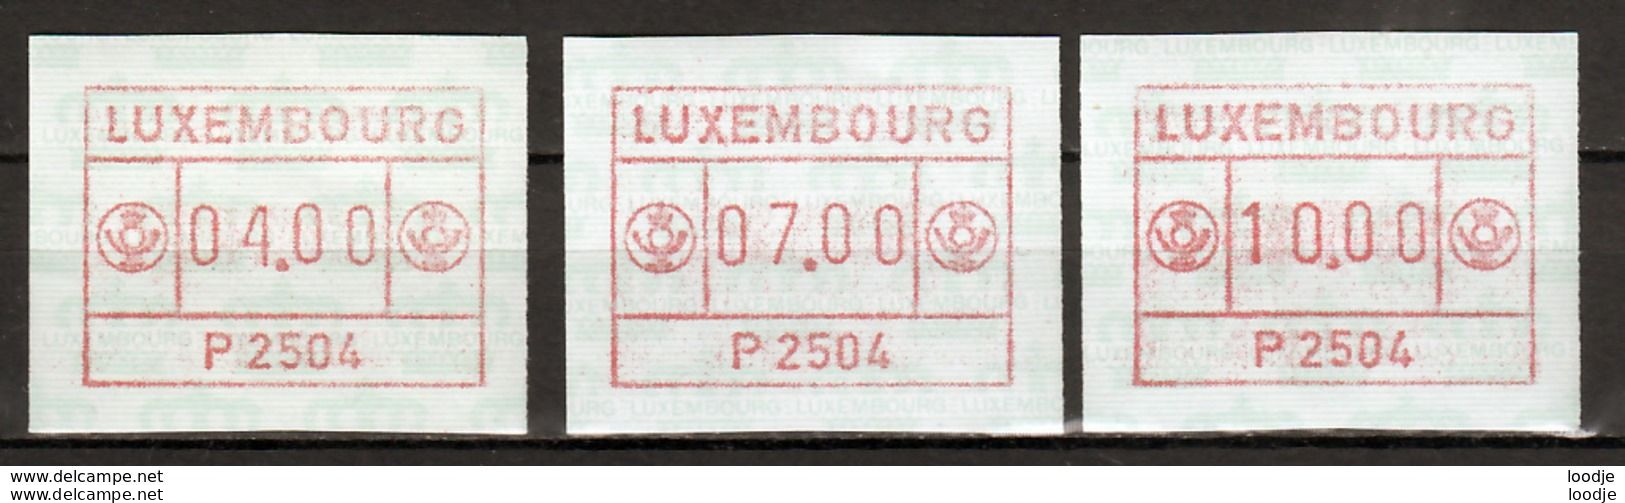 Luxemburg Automaatzegels Mi 1 Div. Postfris - Vignette